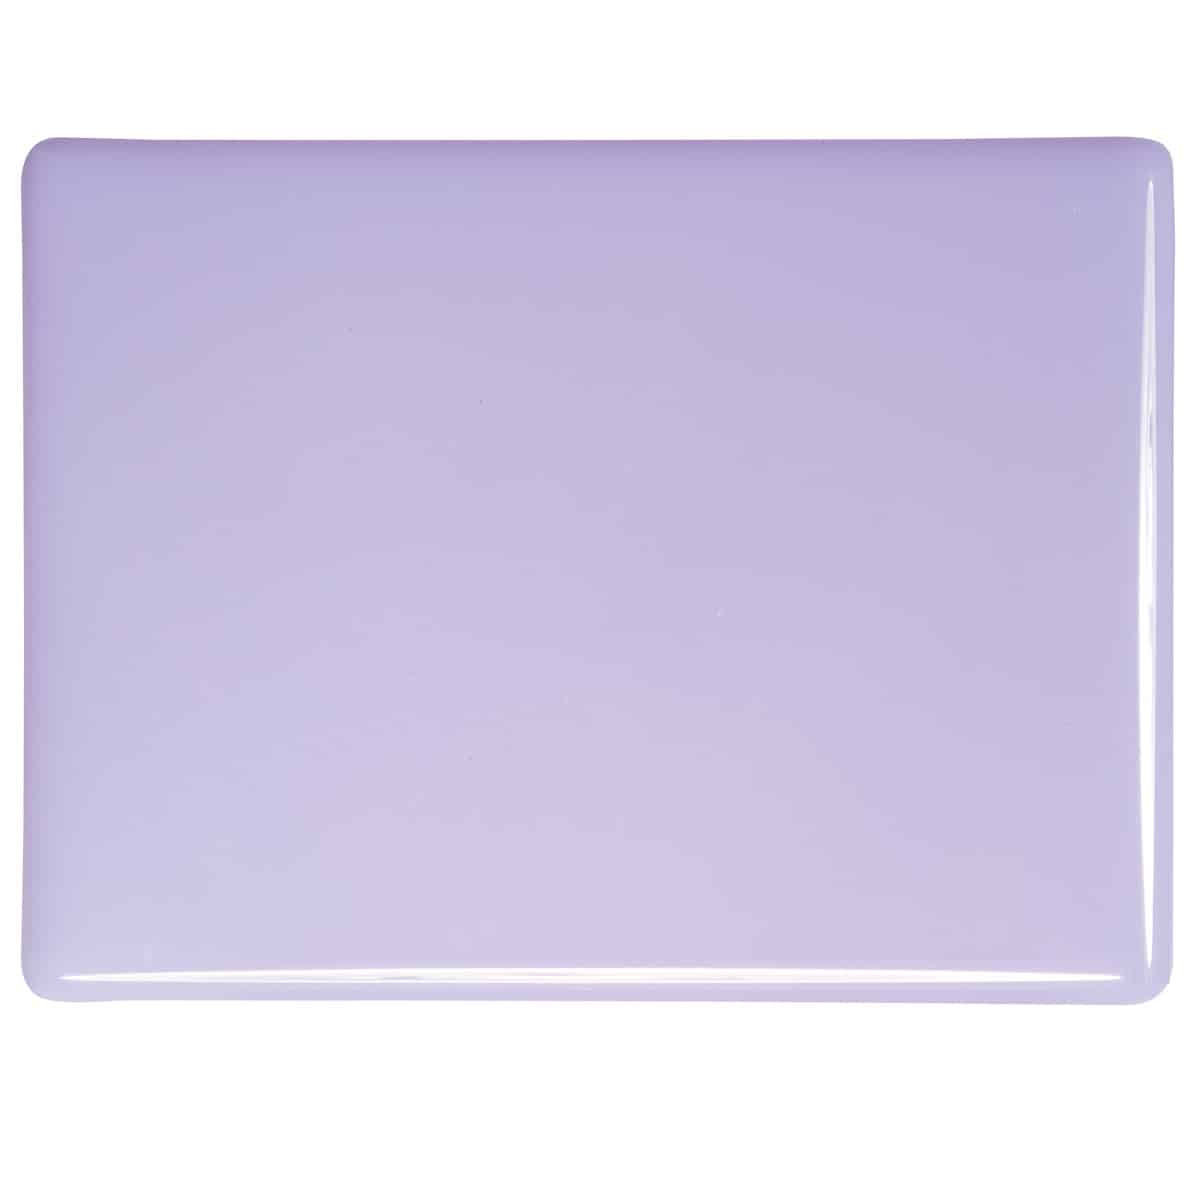 Neo-Lavender Opal sheet glass swatch